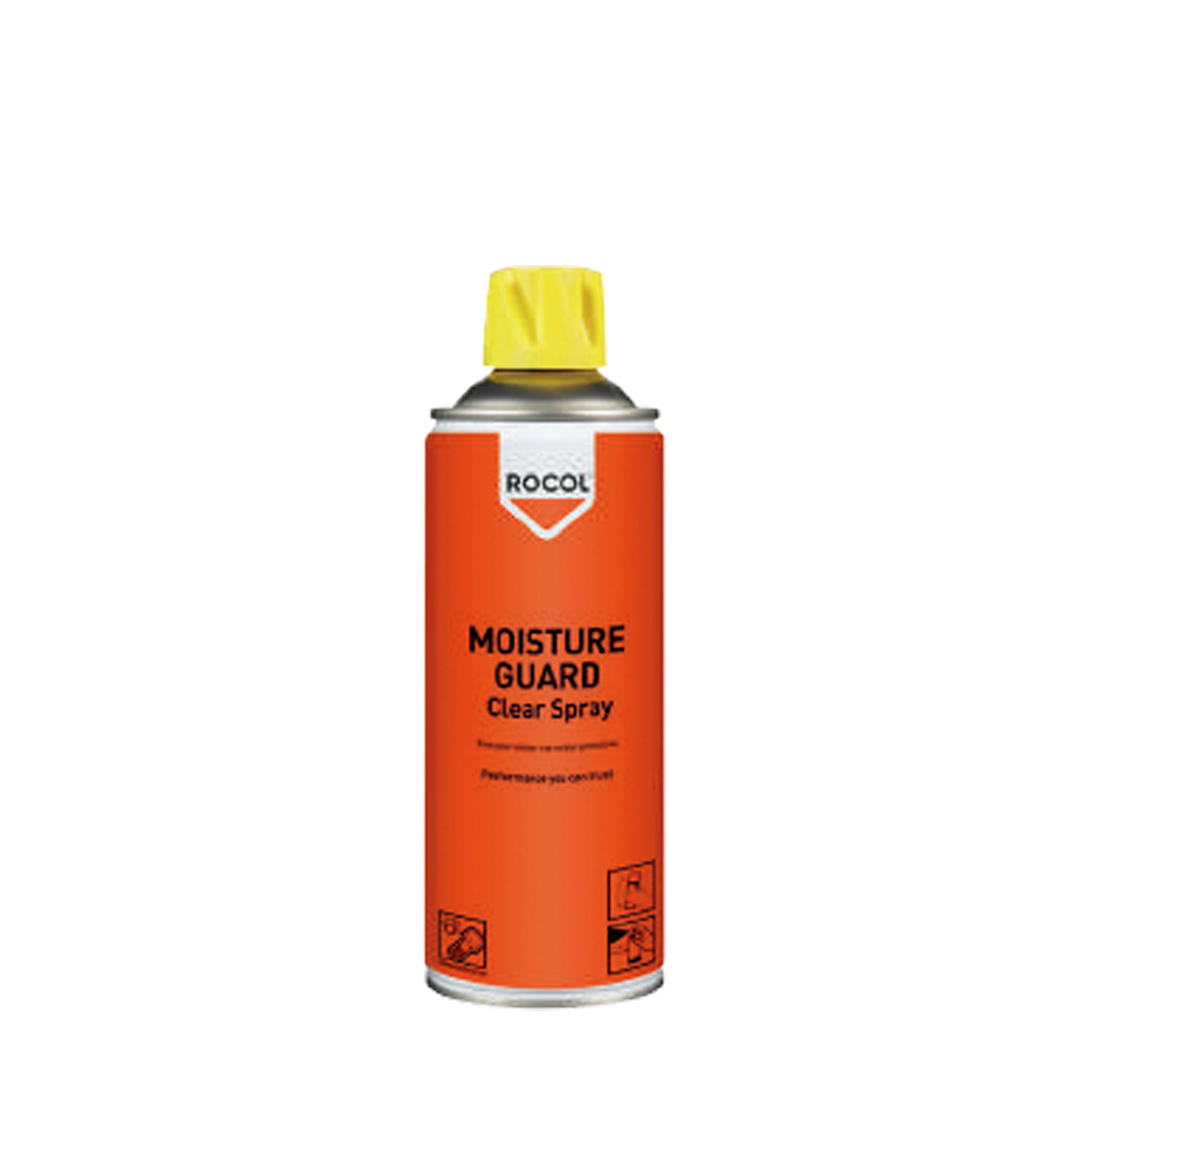 ROCOL MOISTURE GUARD Clear Spray透明模具防锈剂(rocol 69025)是一种近乎干式的薄膜，容易处理，不但能抵抗指模腐蚀，且能提供润滑作用及排除水气，特别适用于潮湿环境及有凝结问题的情况，是一种优秀的室内防锈剂，防锈期可达五年。